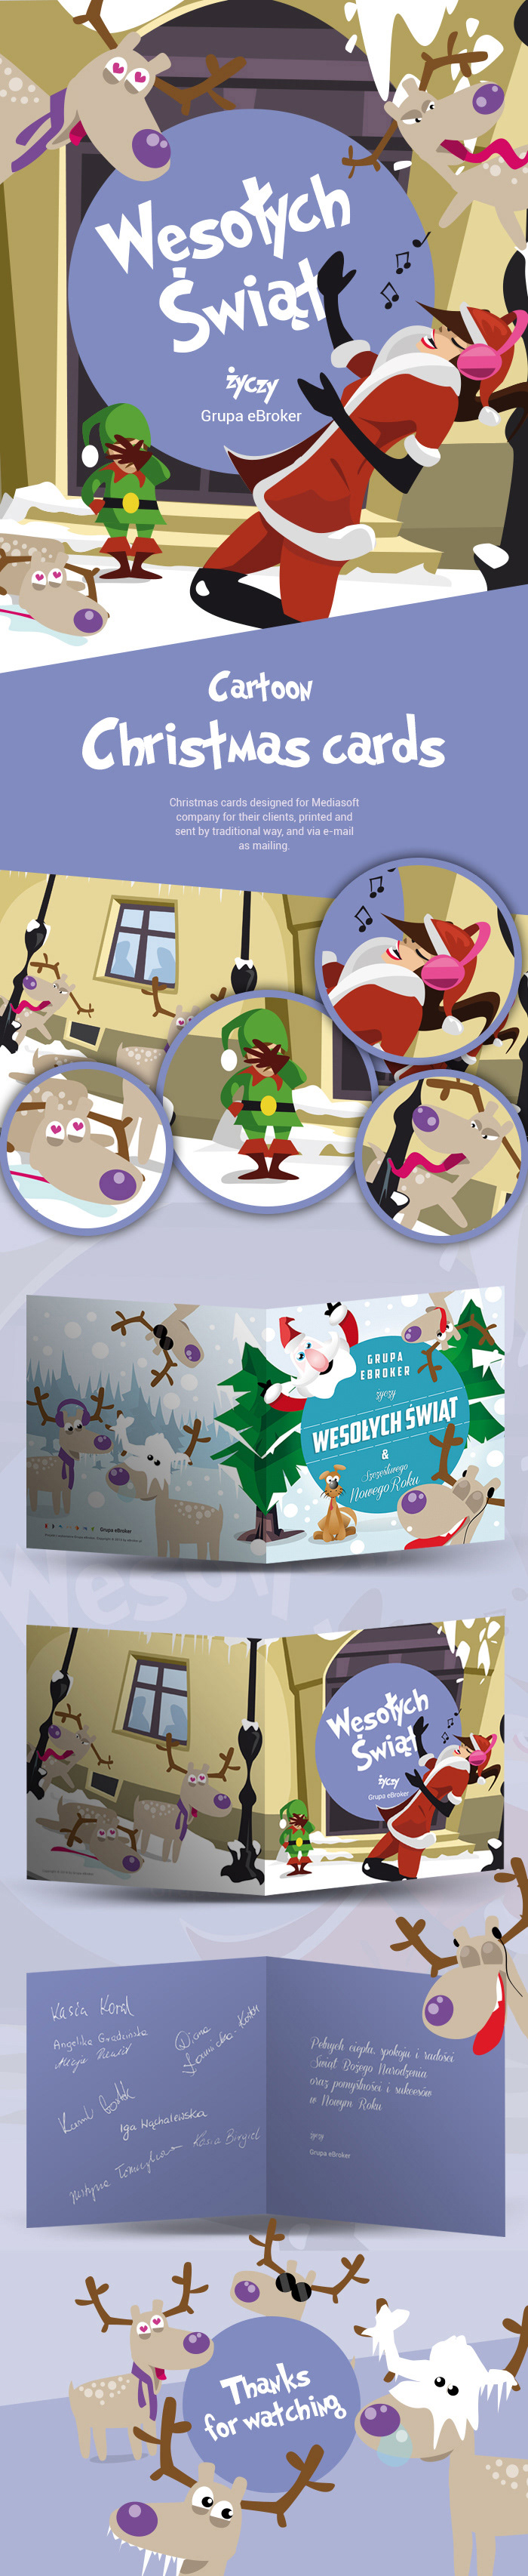 Christmas card christmas card Santa Claus Character cartoon reindeer